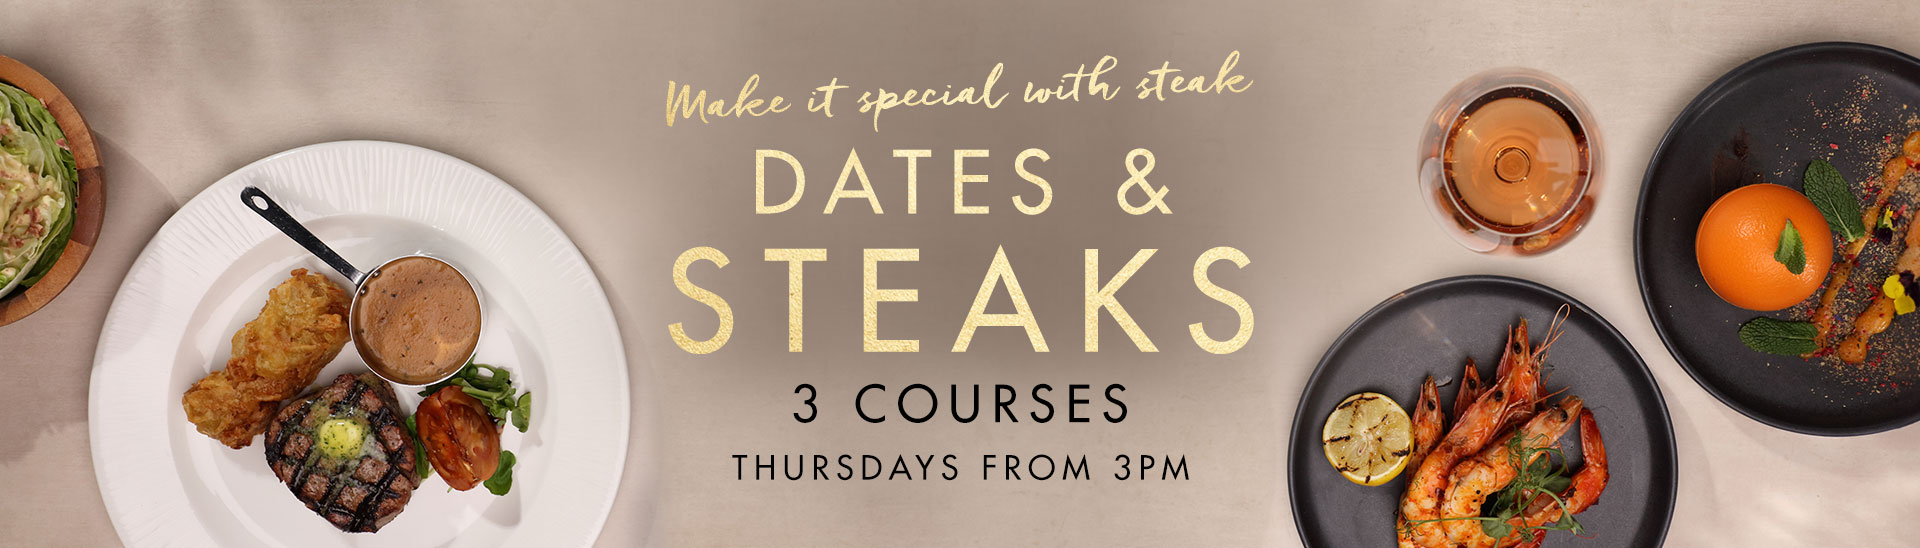 Dates & Steaks at Miller & Carter Sheffield Parkhead